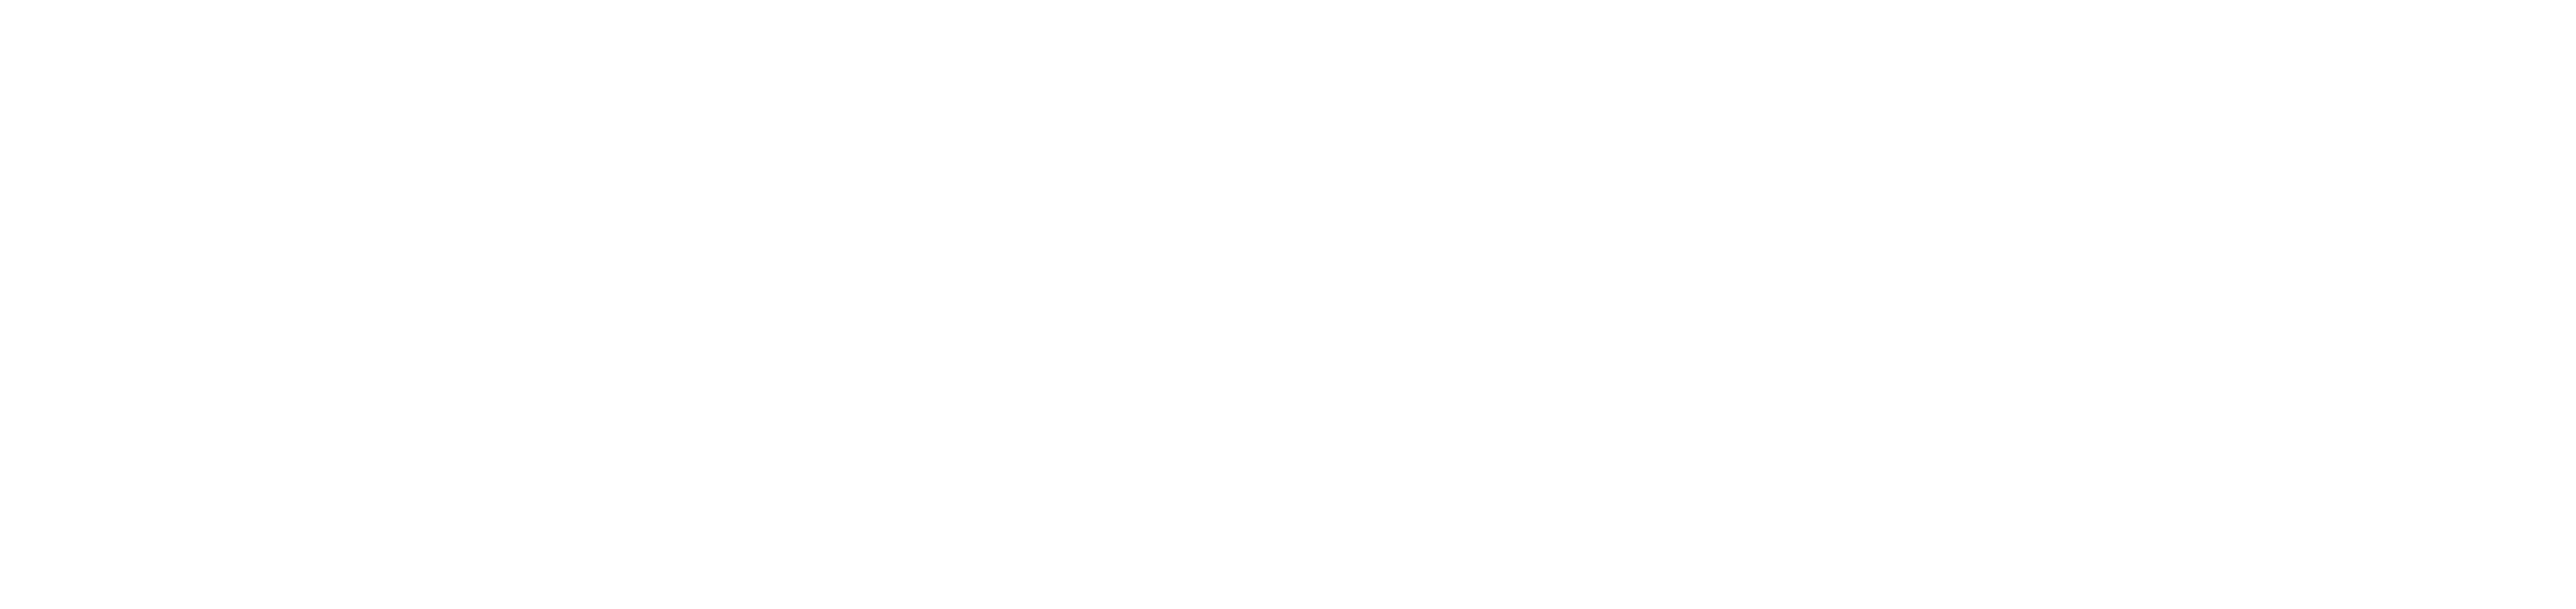 Caravan Industry Association of Australia Logo